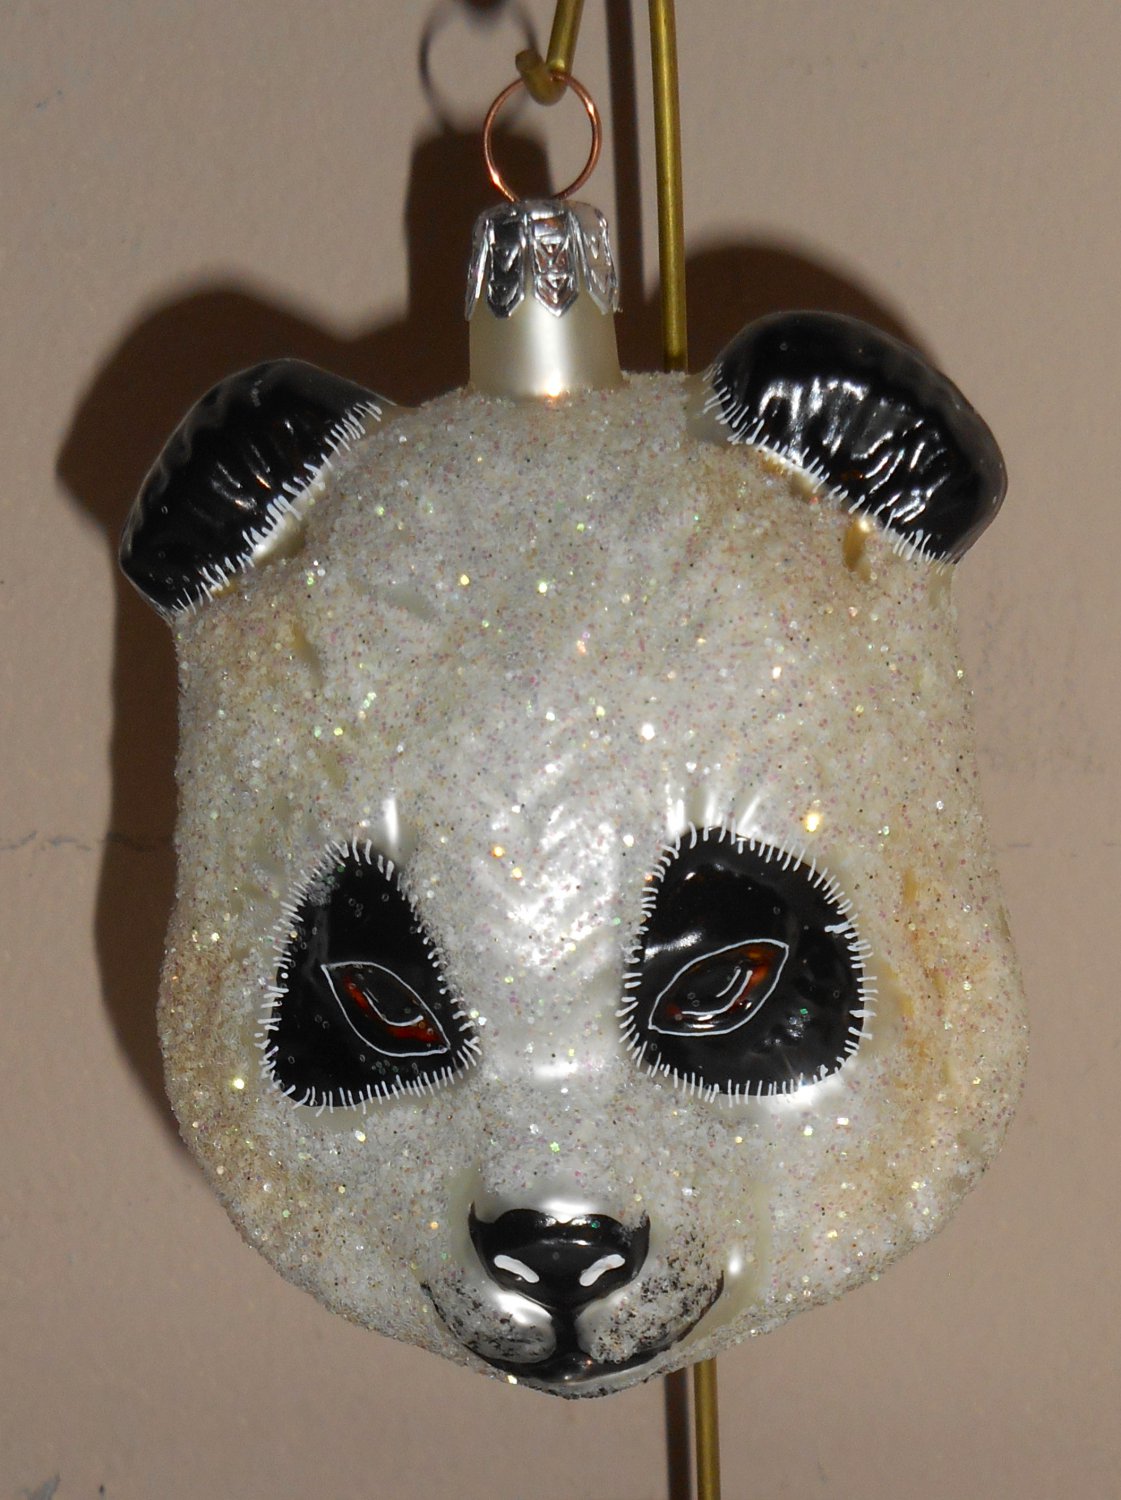 Slavic Treasures Mini Panda Head Blown Glass Ornament Poland Glitter